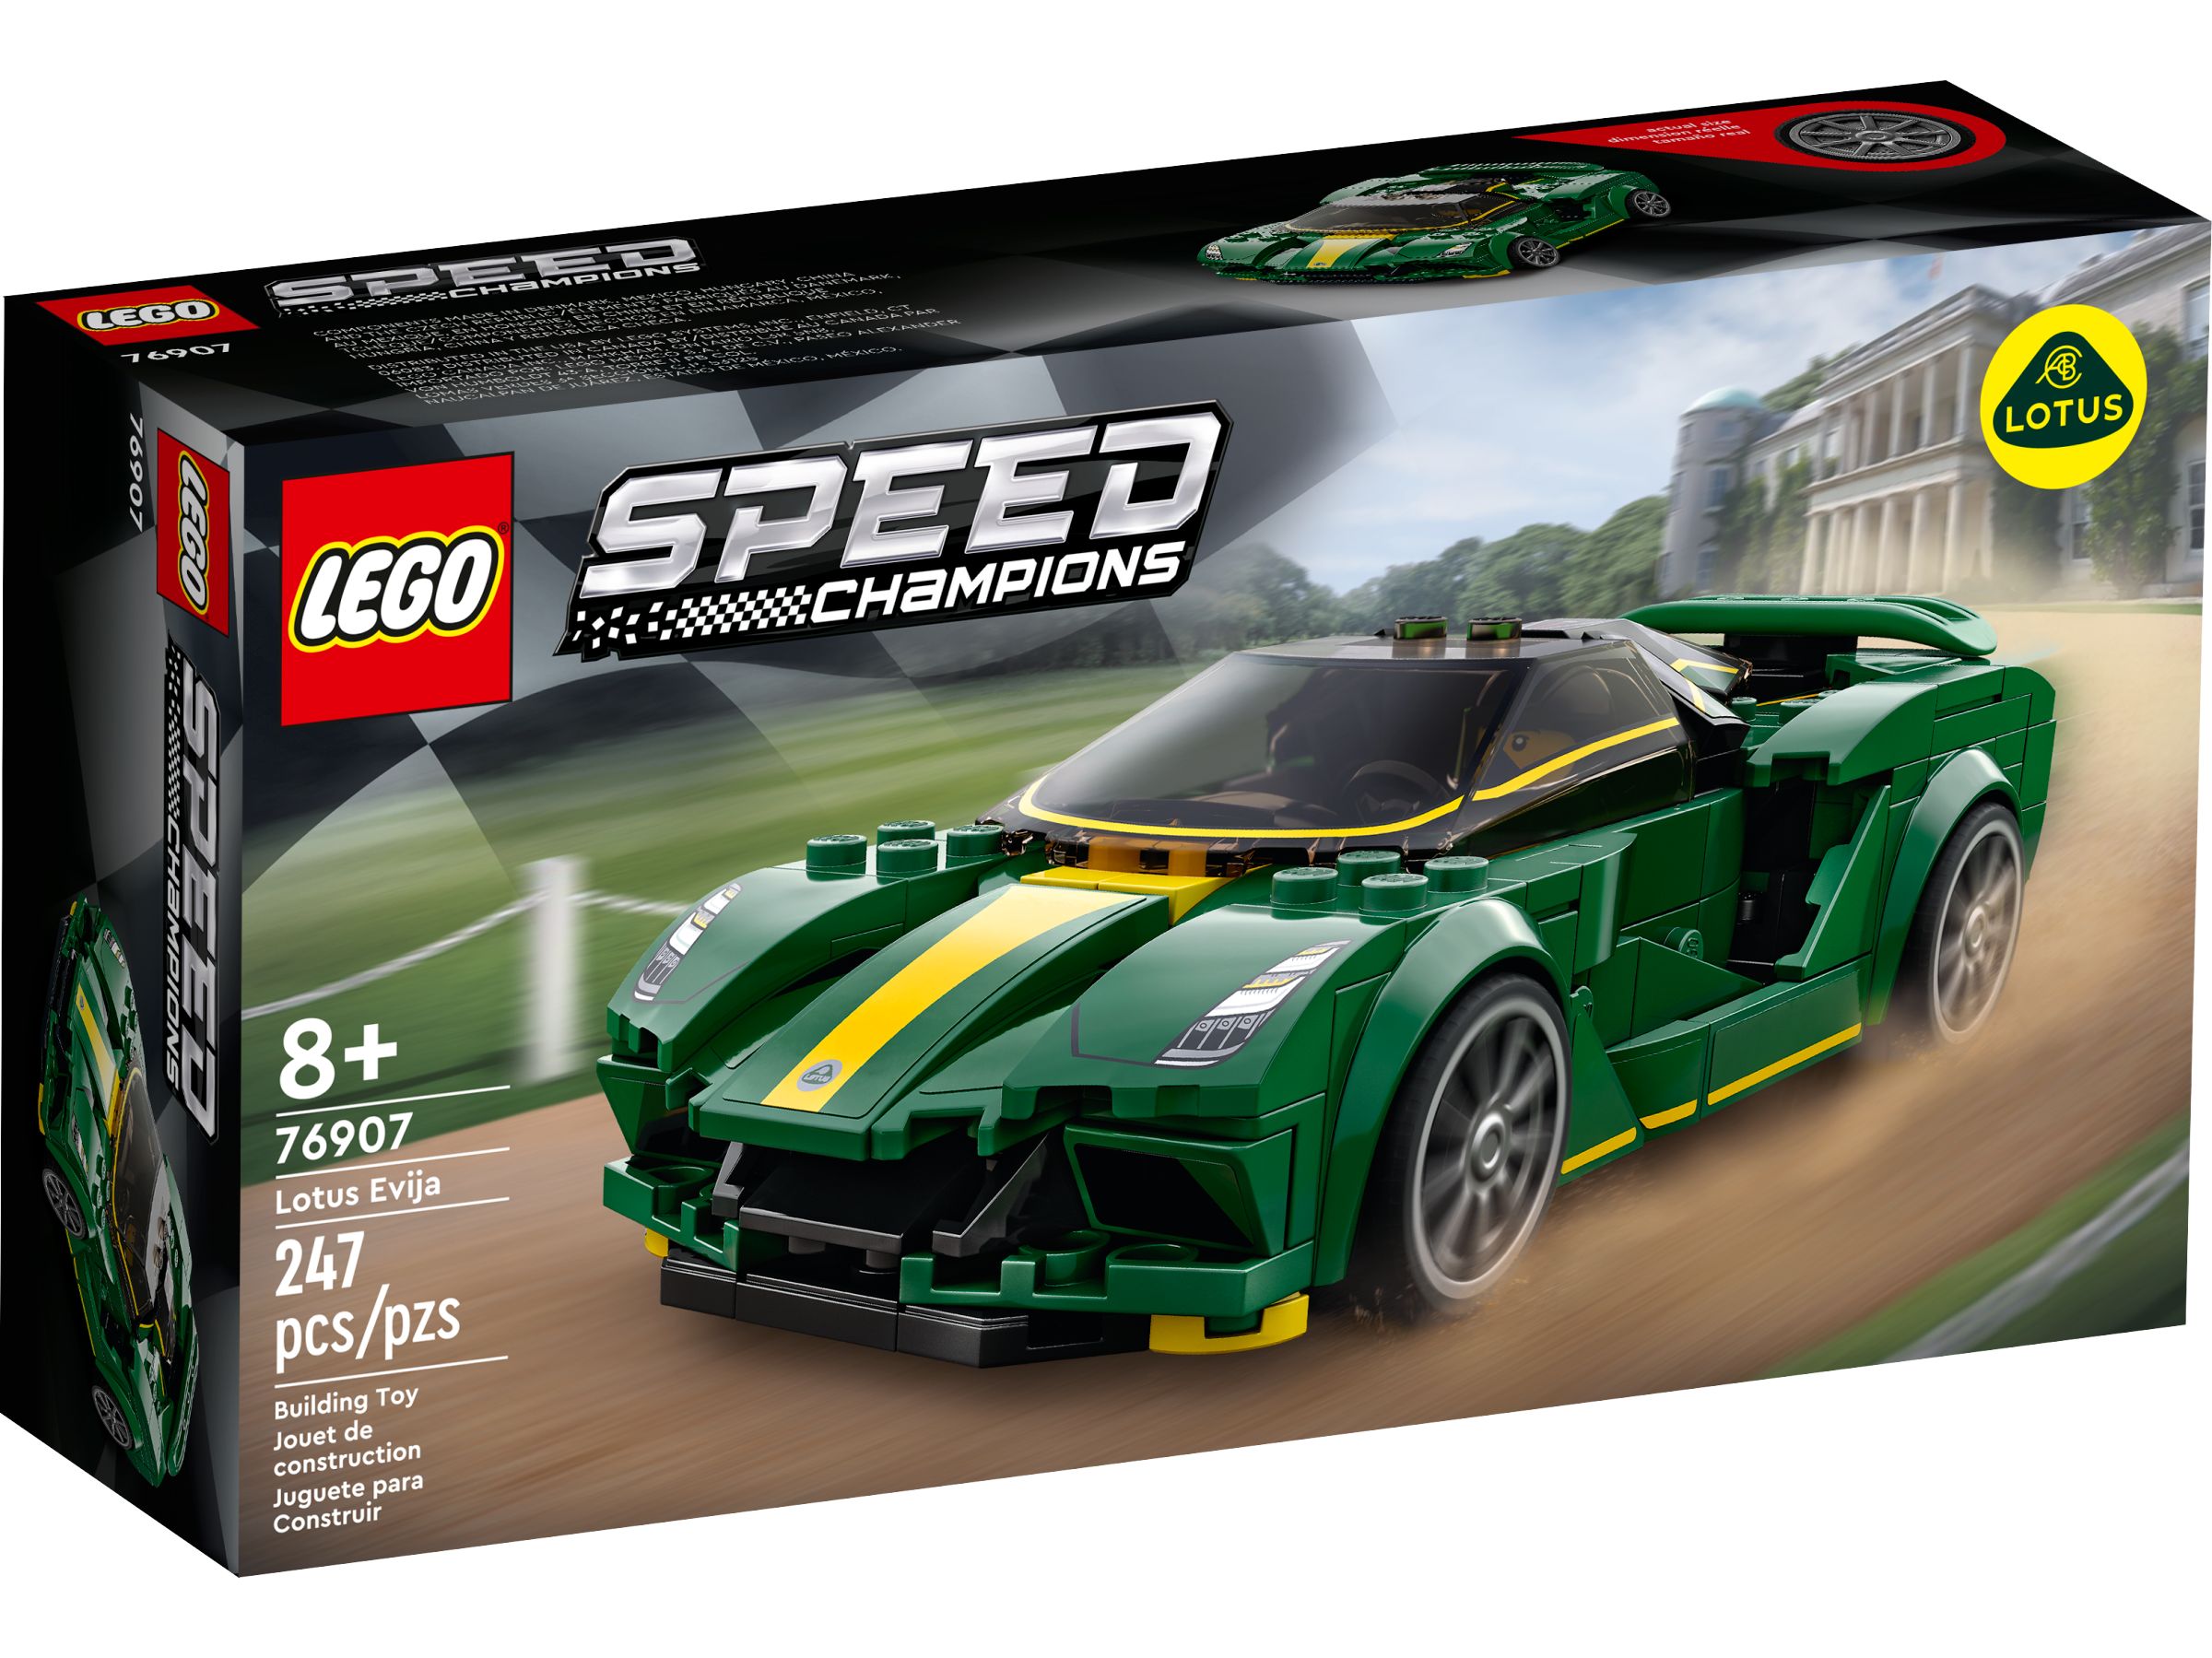 LEGO Speed Champions 76907 Lotus Evija LEGO_76907_alt1.jpg